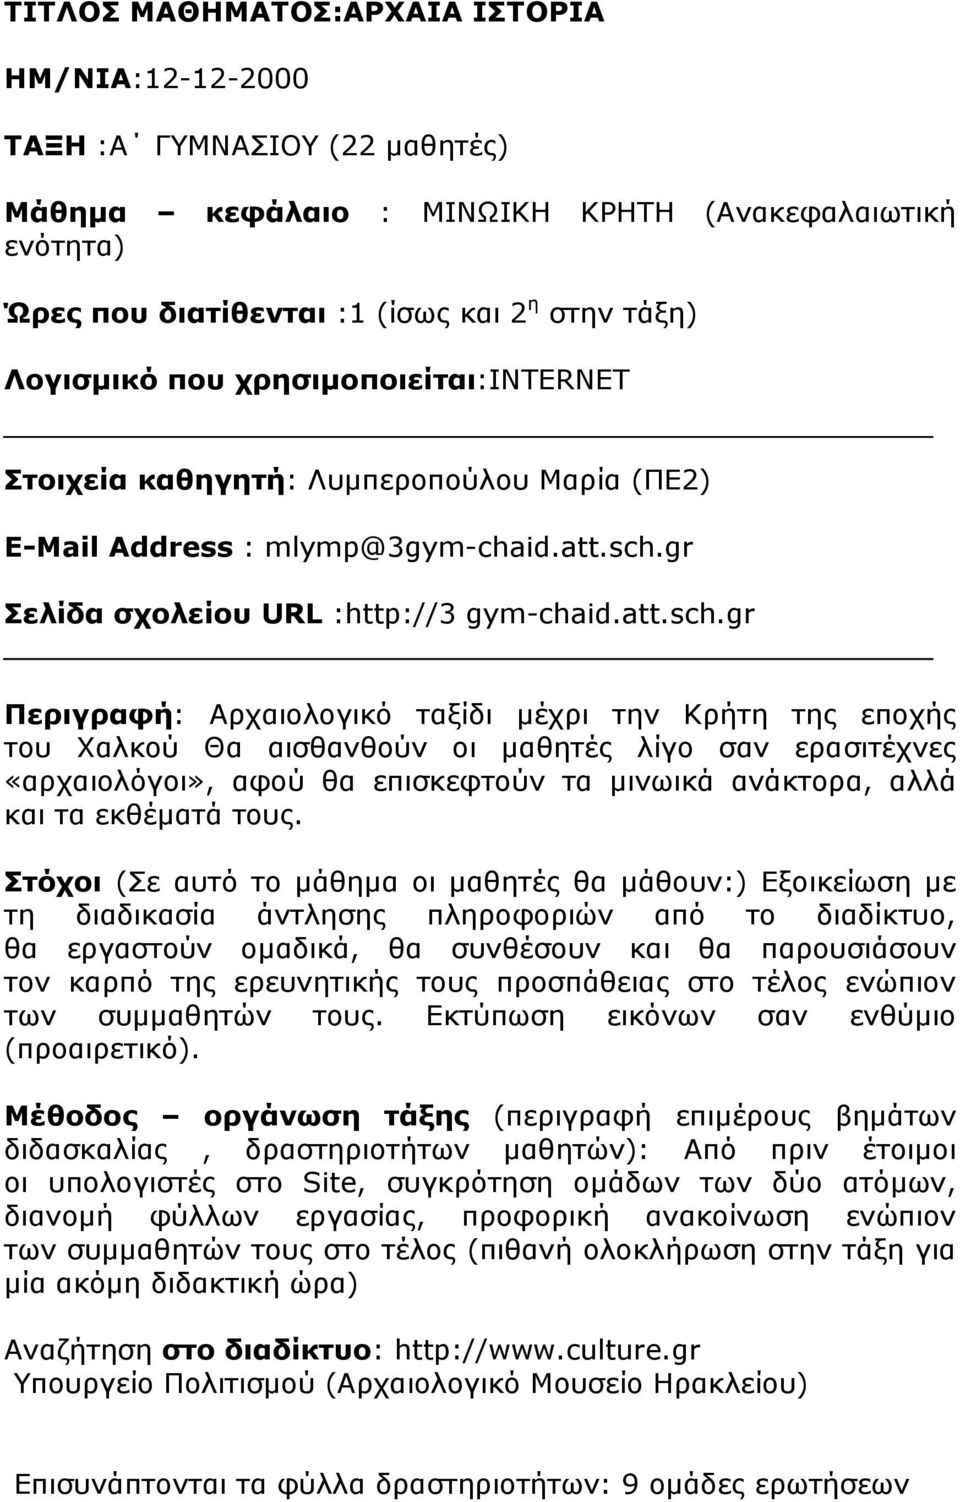 gr Σελίδα σχολείου URL :http://3 gym-chaid.att.sch.